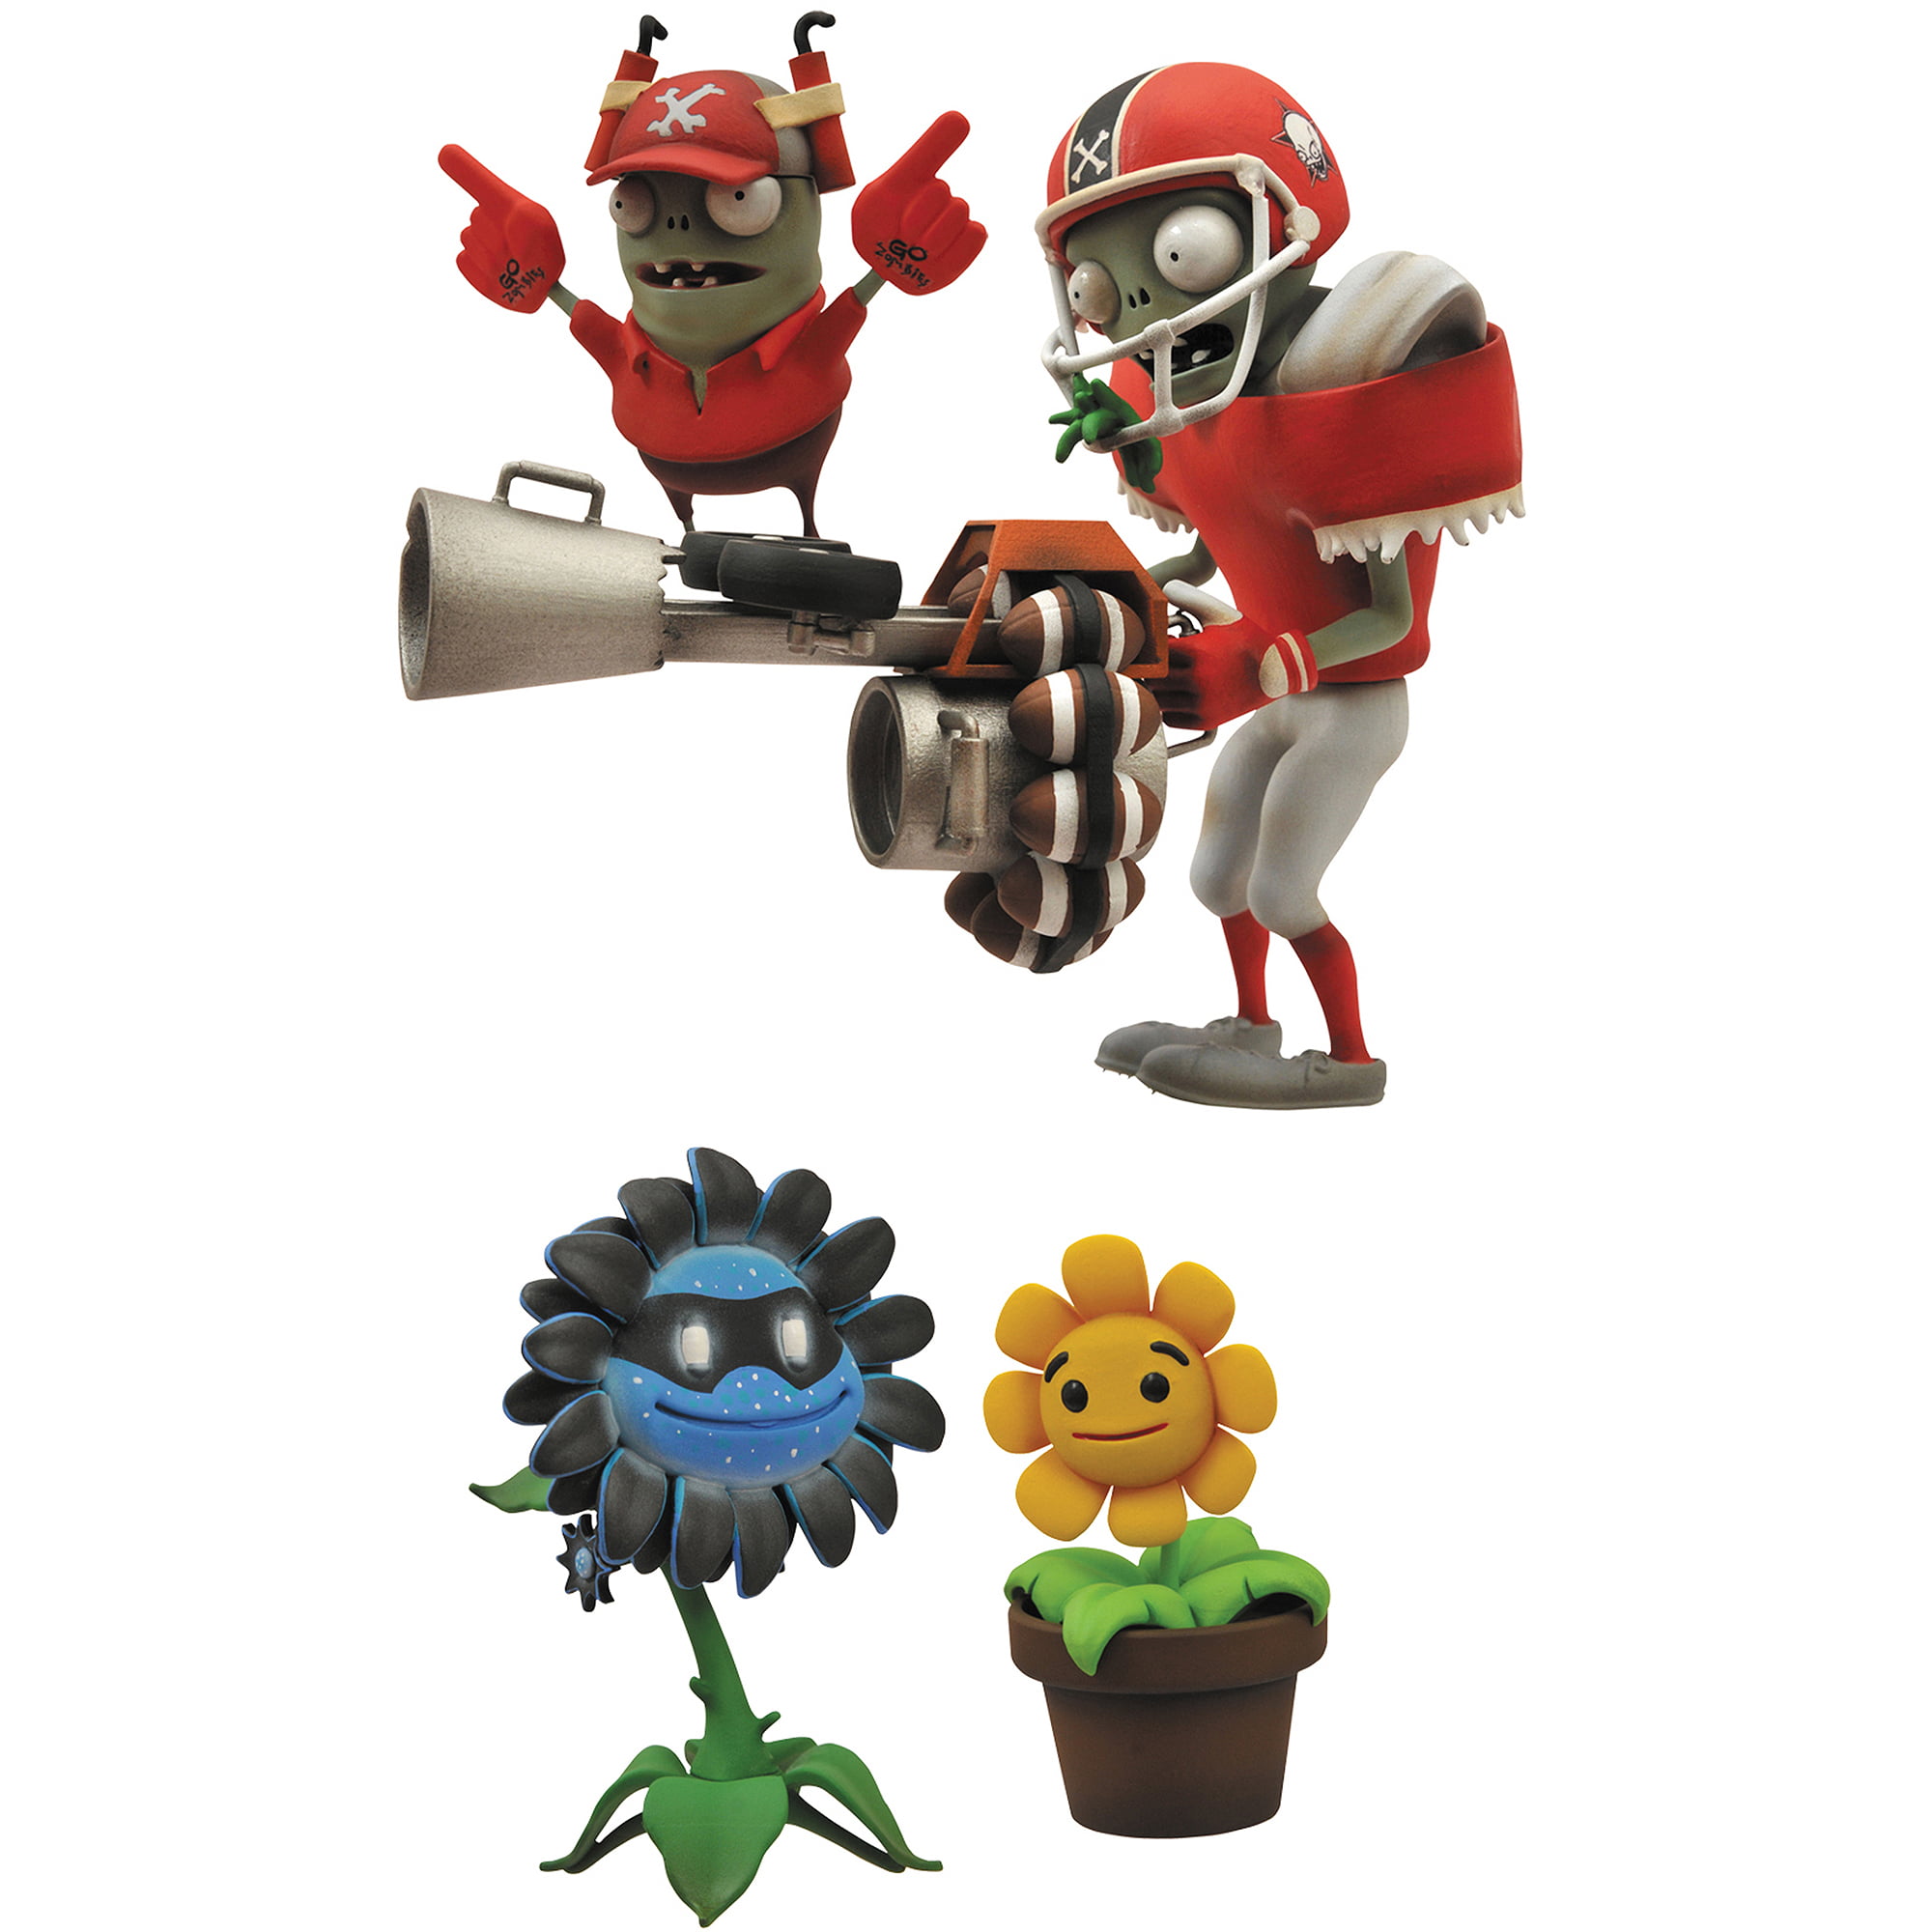 Plants Vs. Zombies: Garden Warfare All-Star Zombie and Dark